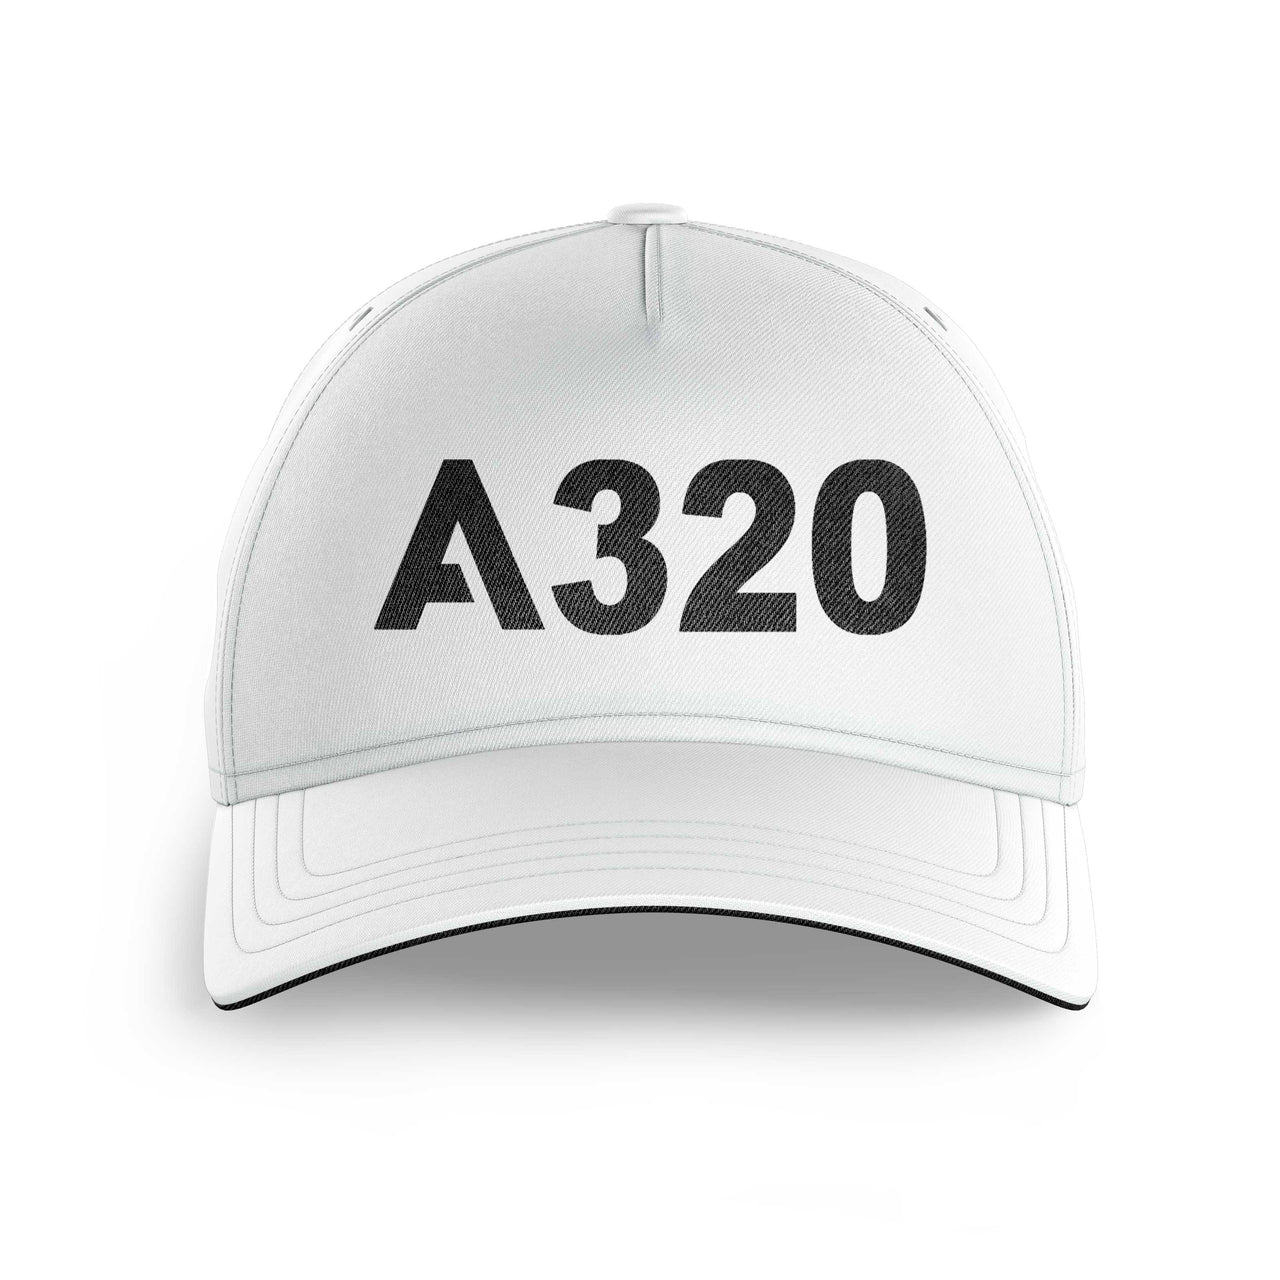 A320 Flat Text Printed Hats